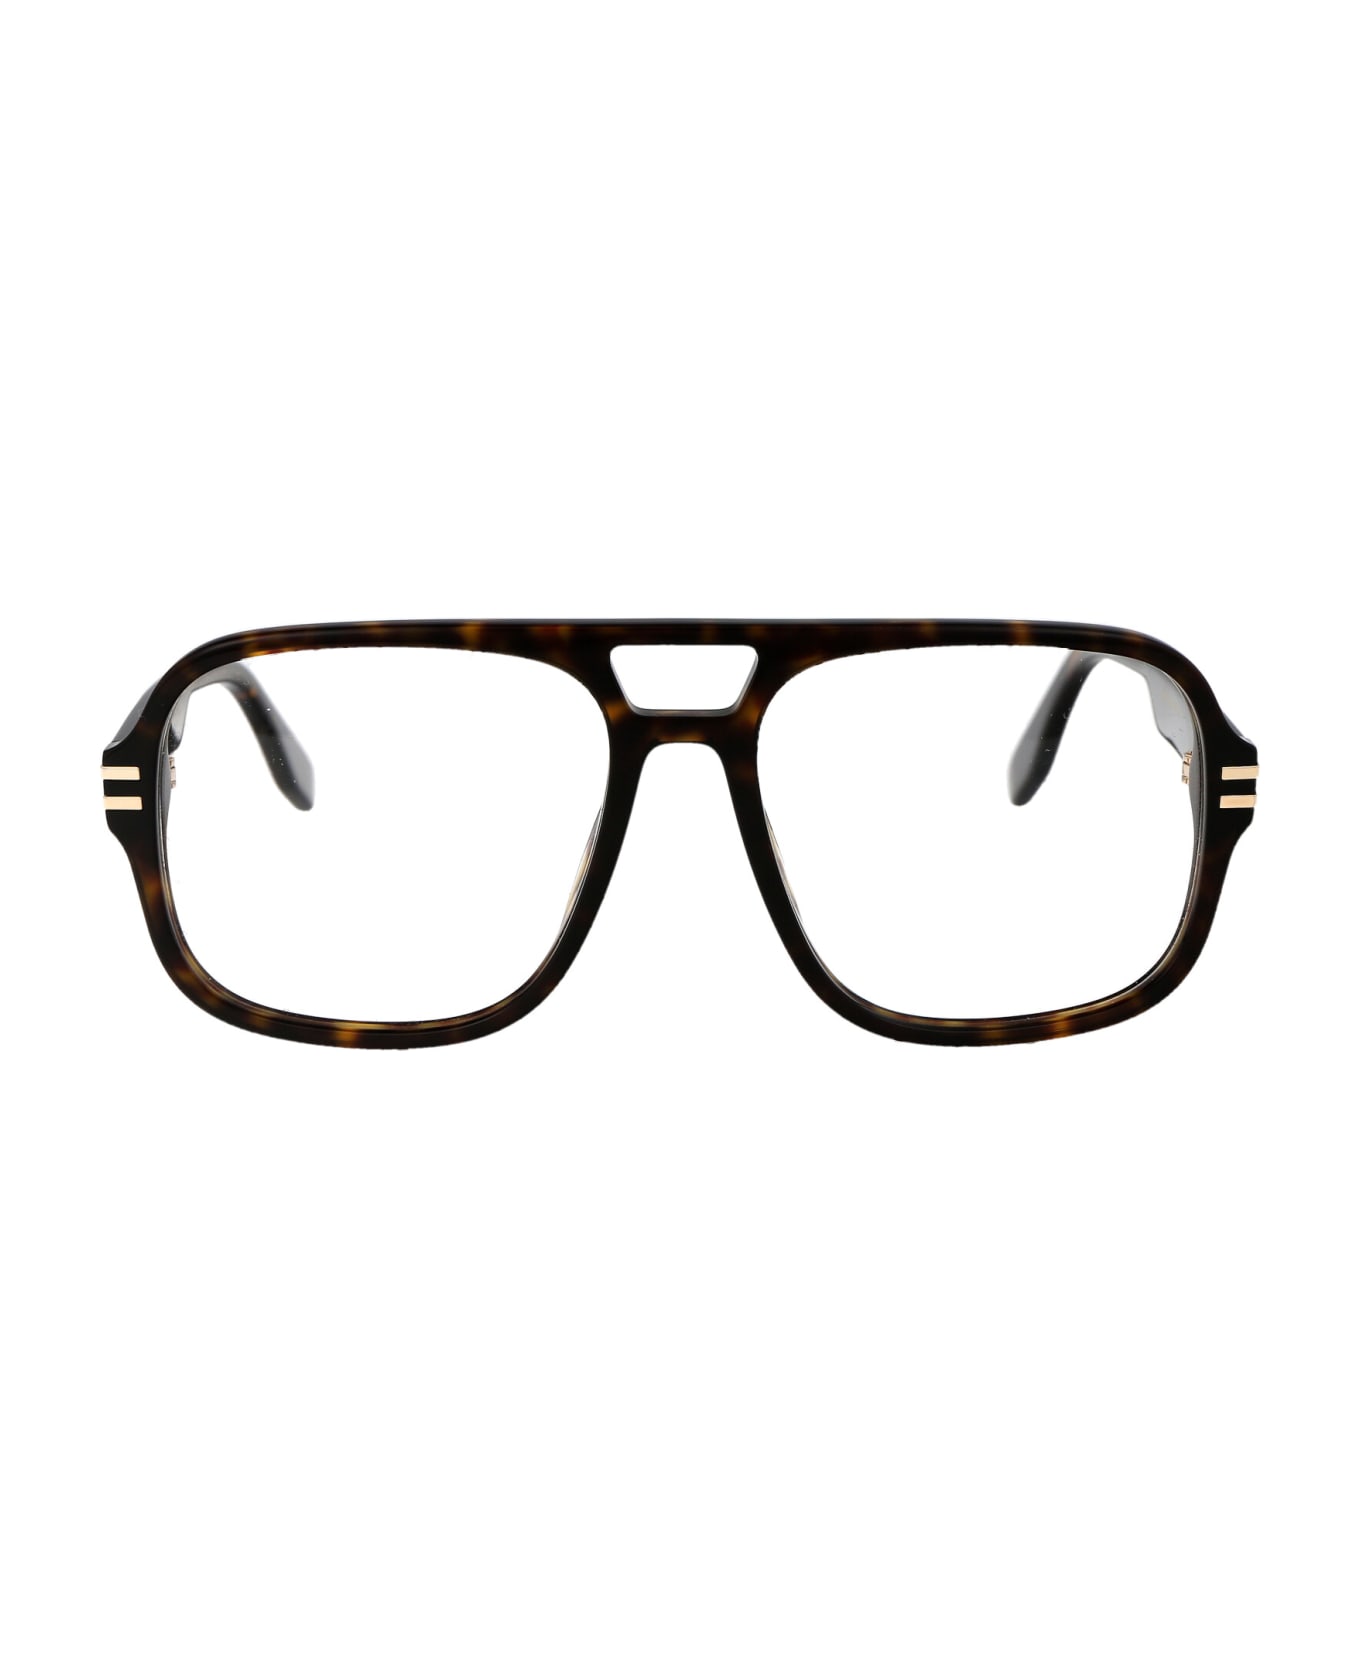 Marc Jacobs Eyewear Marc 755 Glasses - 086 HVN アイウェア